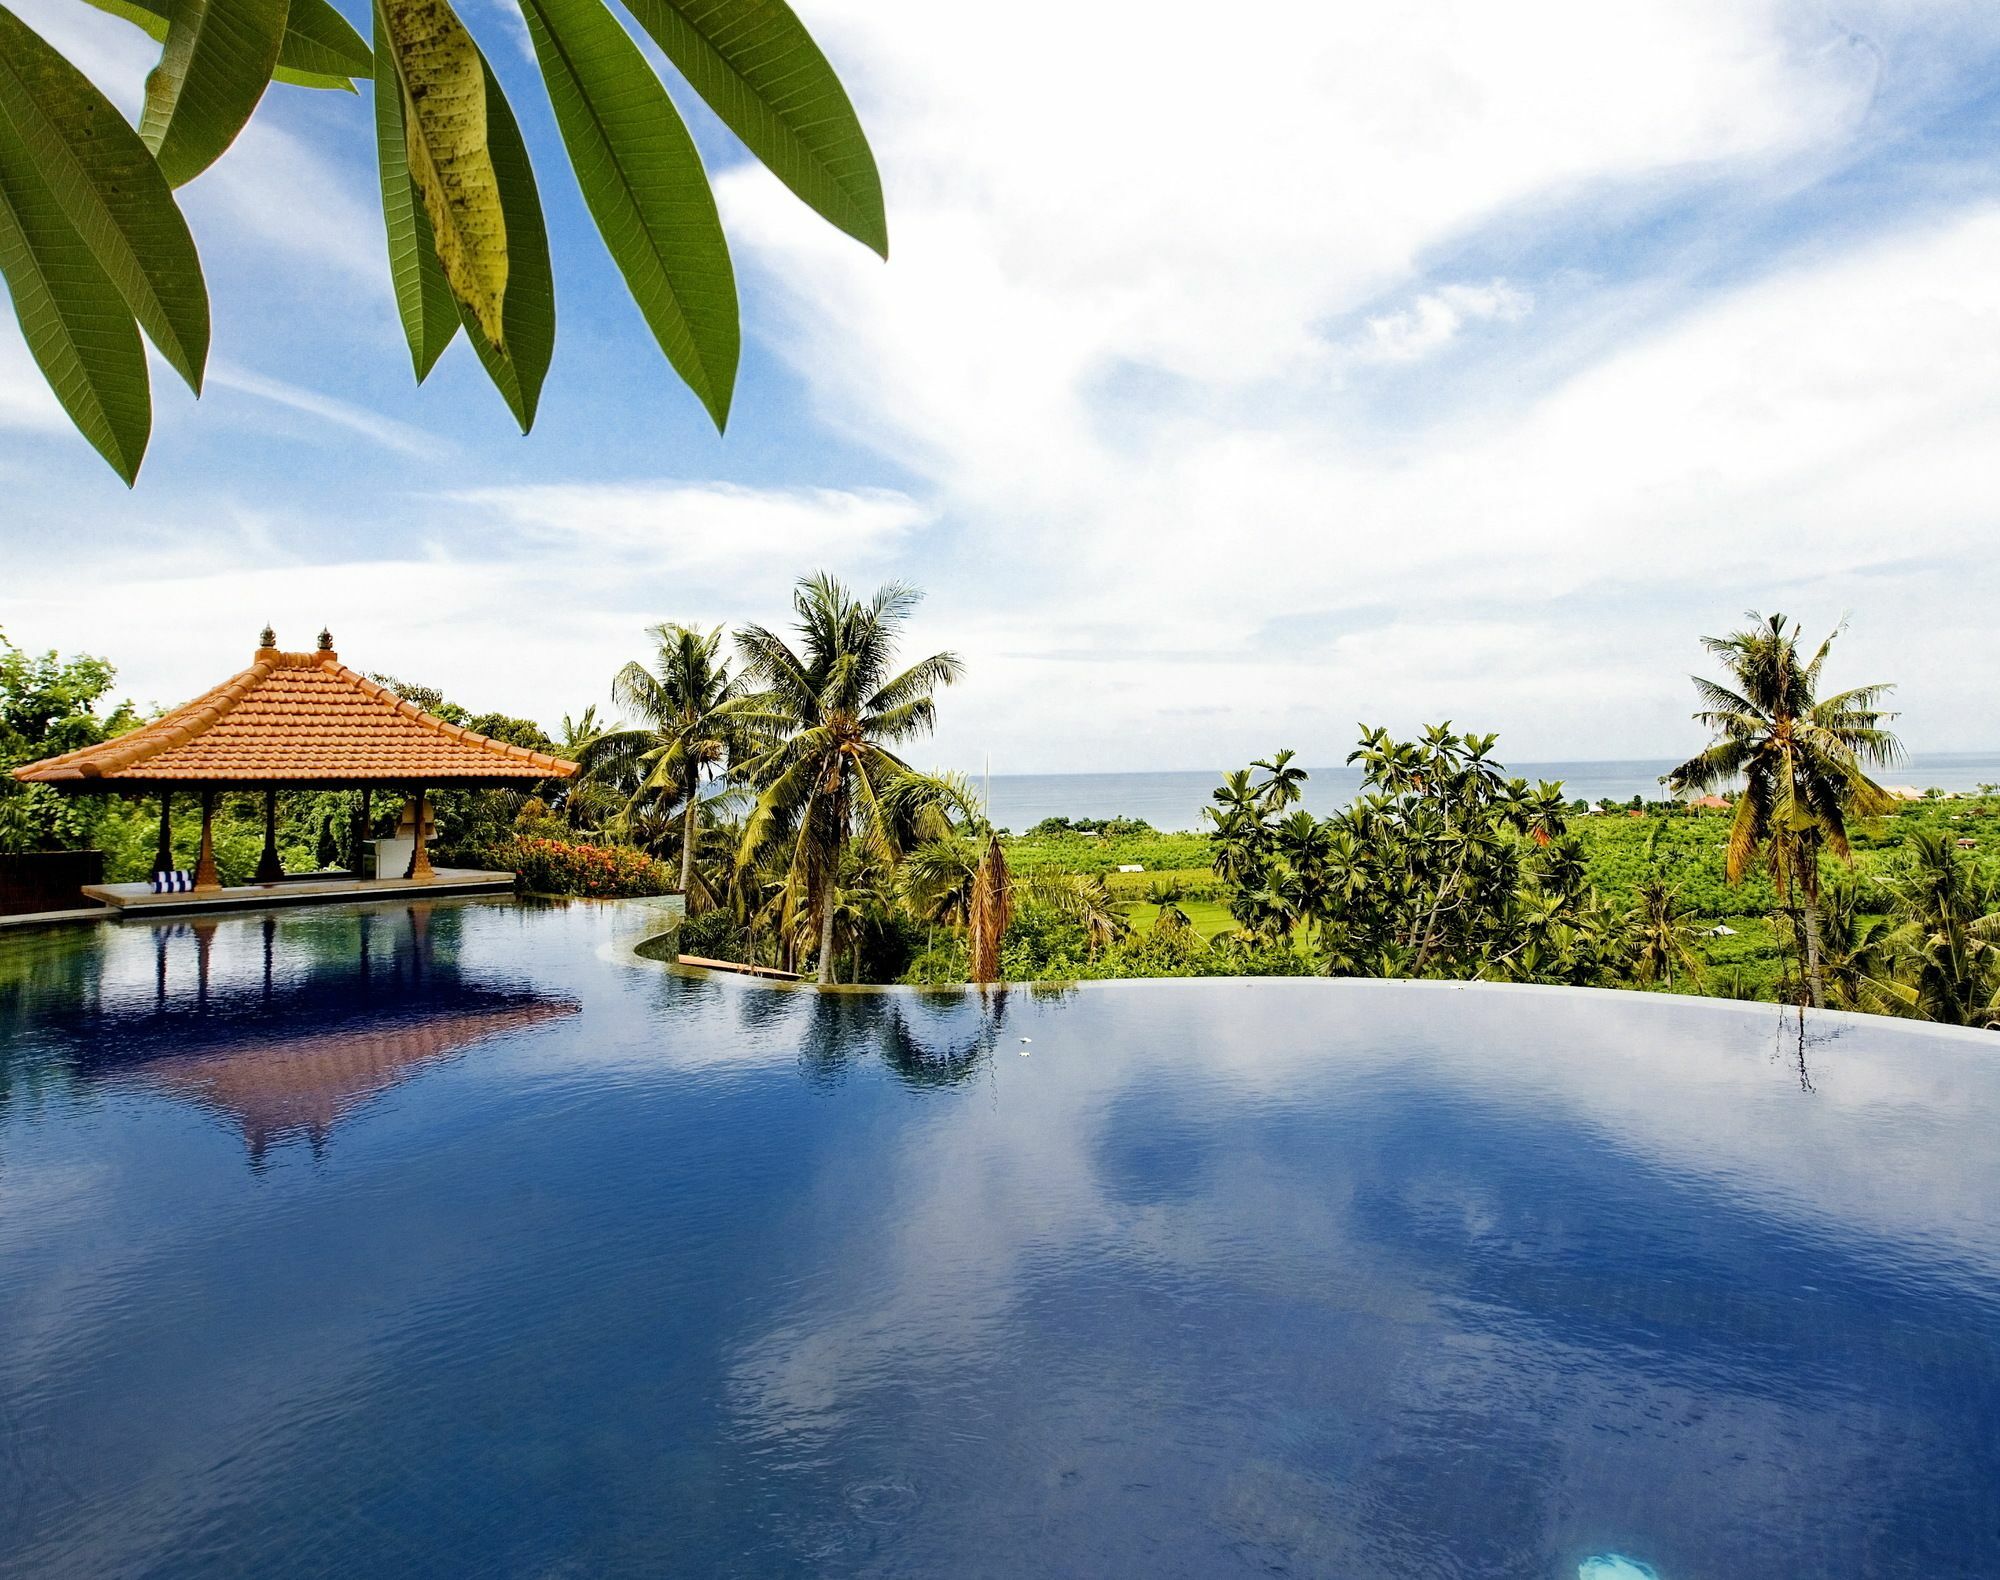 Bali Nibbana Resort Seririt  Exterior photo